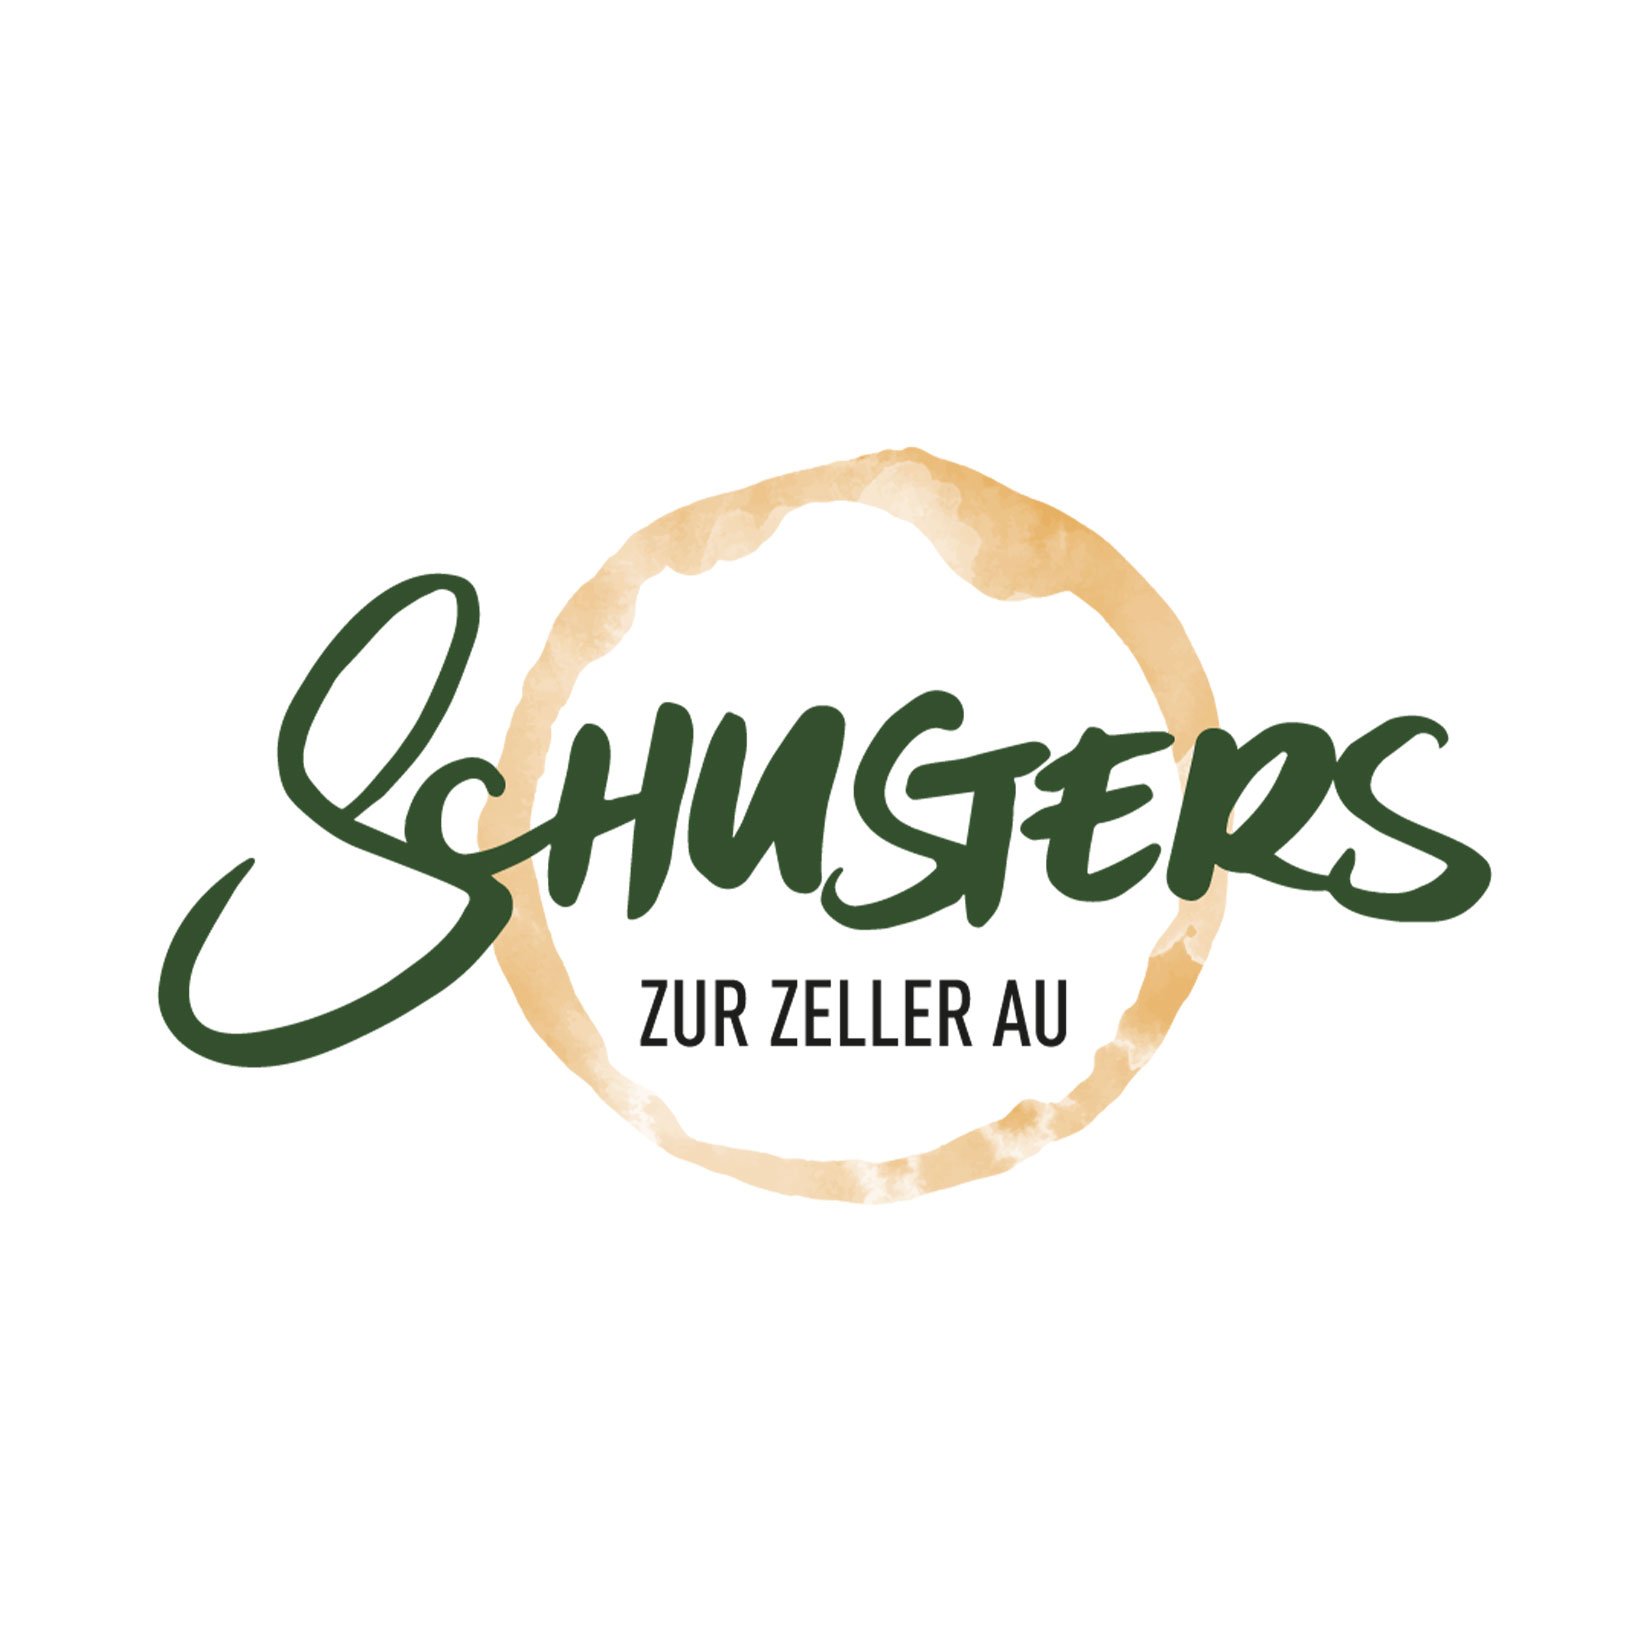 ZurZellerAu Schusters Logogestaltung Würzburg